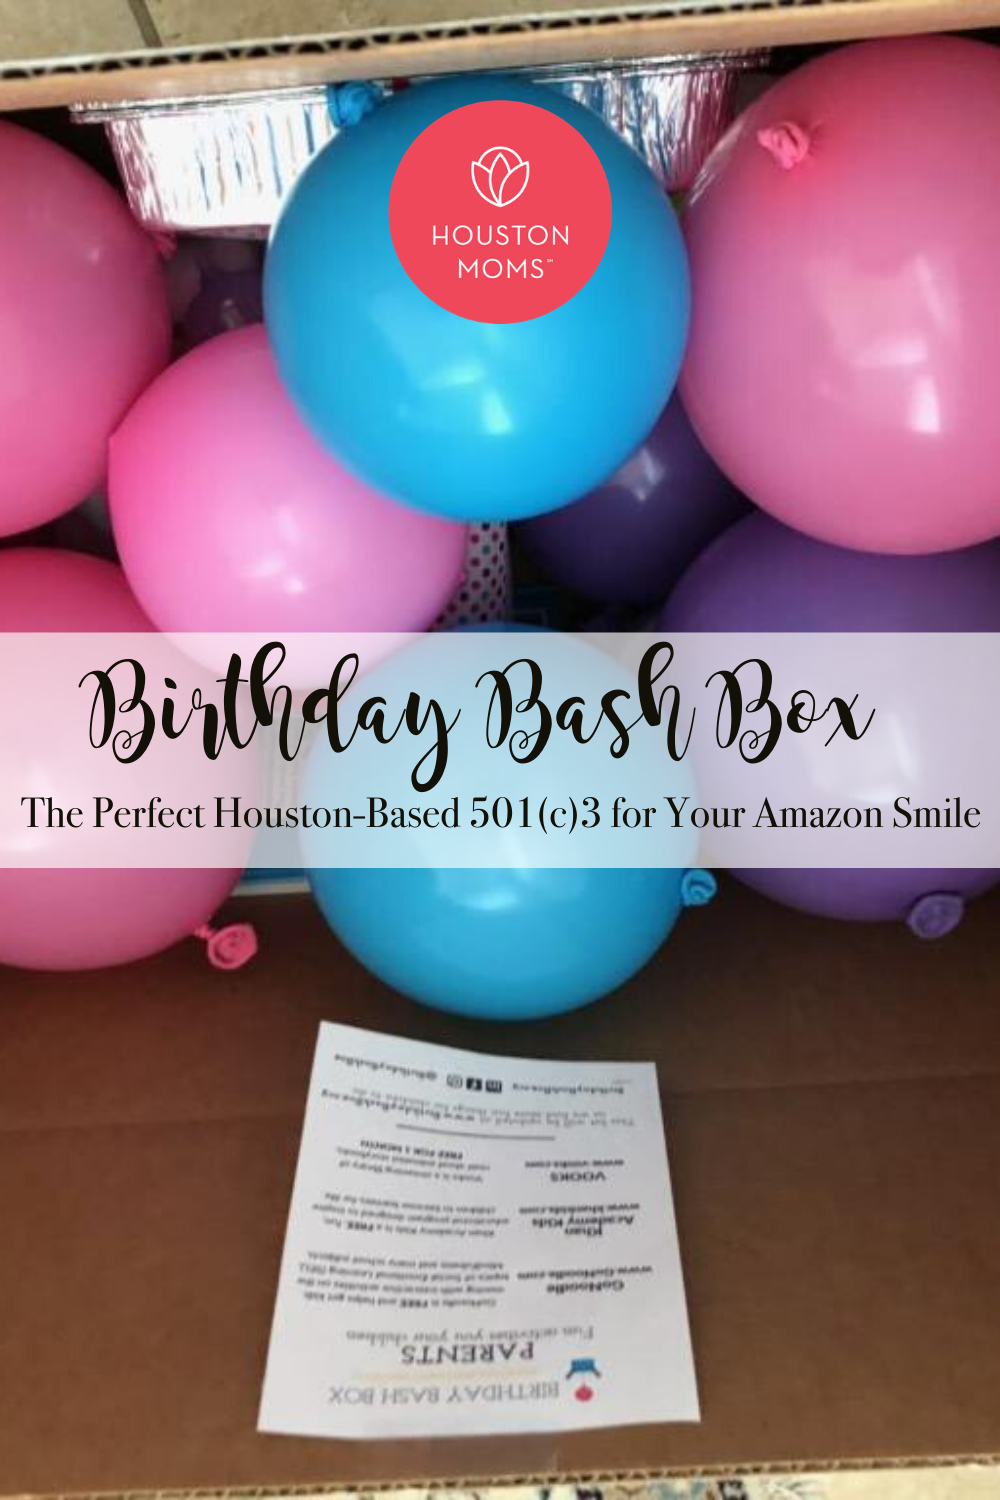 Houston Moms "Birthday Bash Box:: The Perfect Houston-Based 501(c)3 for Your Amazon Smile" #houstonmoms #houstonmomsblog #momsaroundhouston